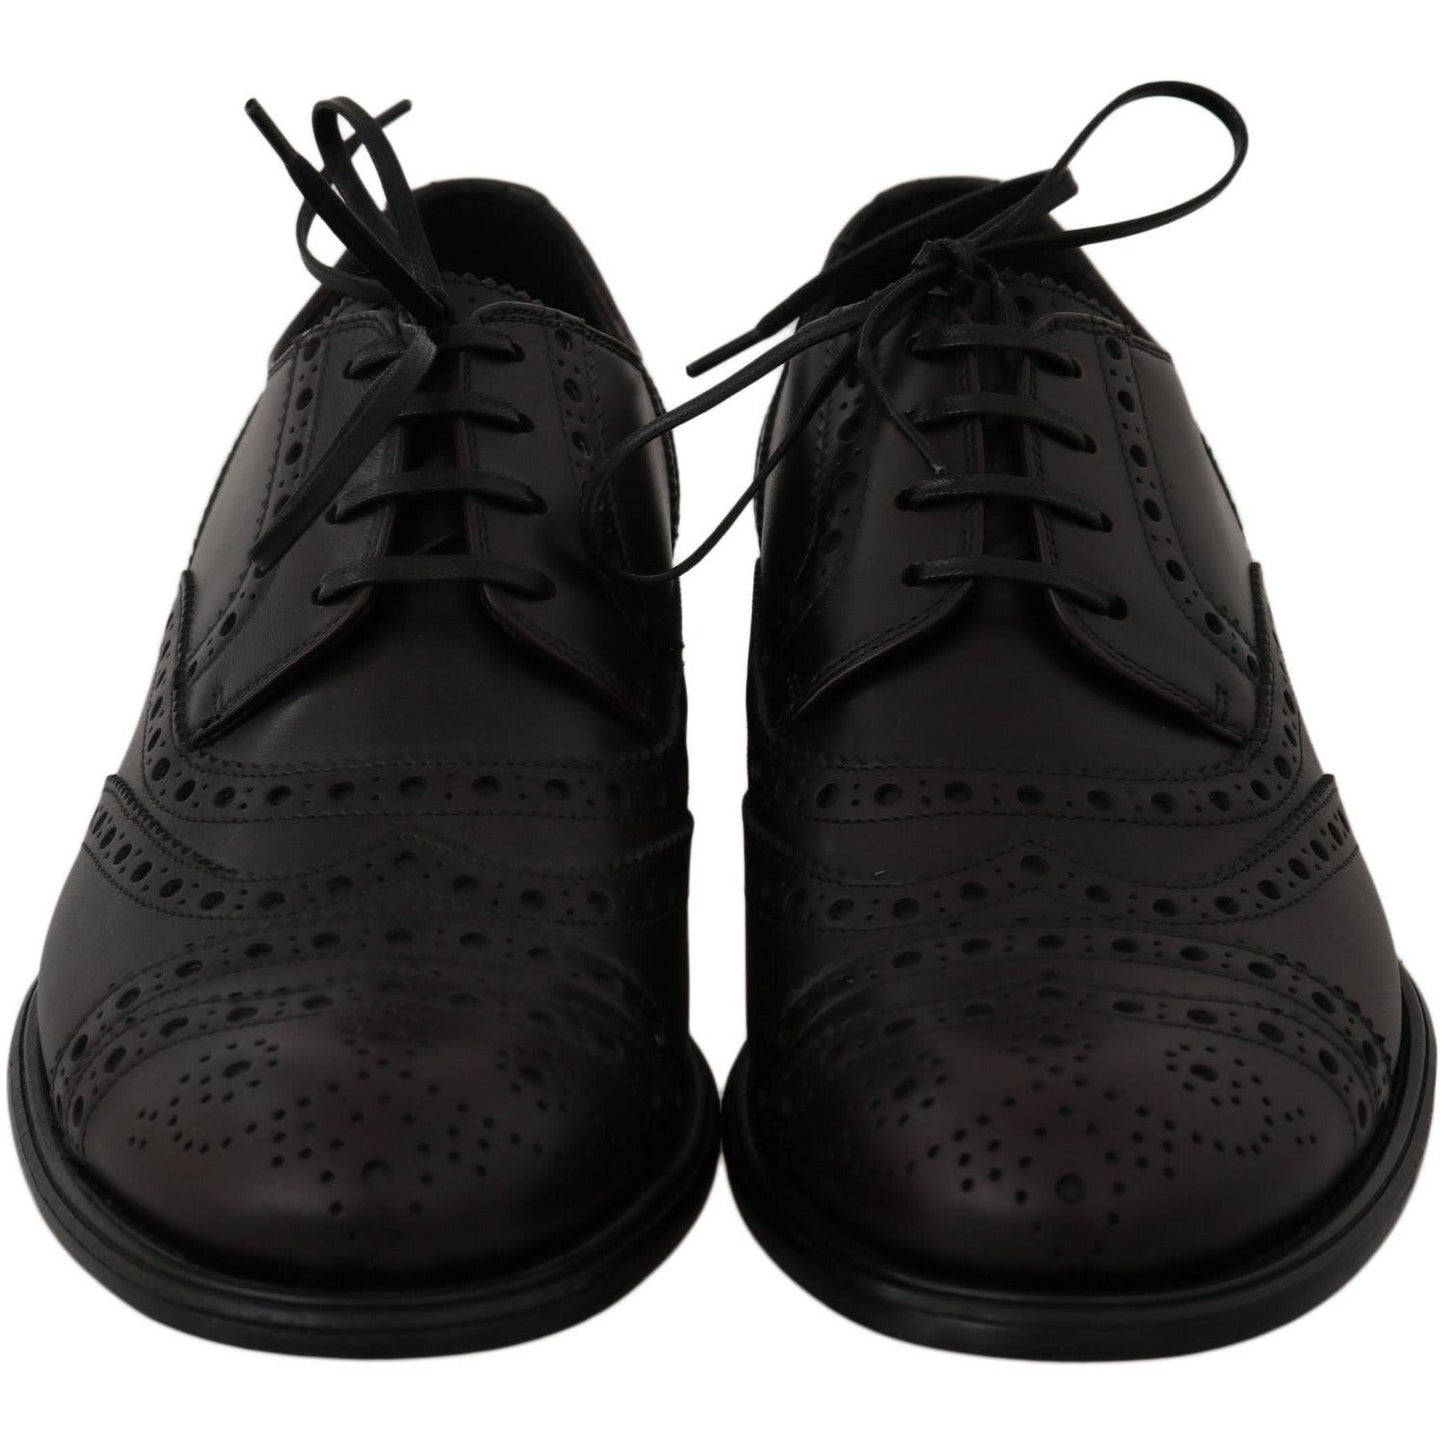 Dolce & Gabbana Elegant Bordeaux Wingtip Derby Dress Shoes black-leather-wingtip-oxford-dress-shoes-1 Dress Shoes IMG_8976_38d83969-094c-44b6-8ed8-c674a412bfac.jpg